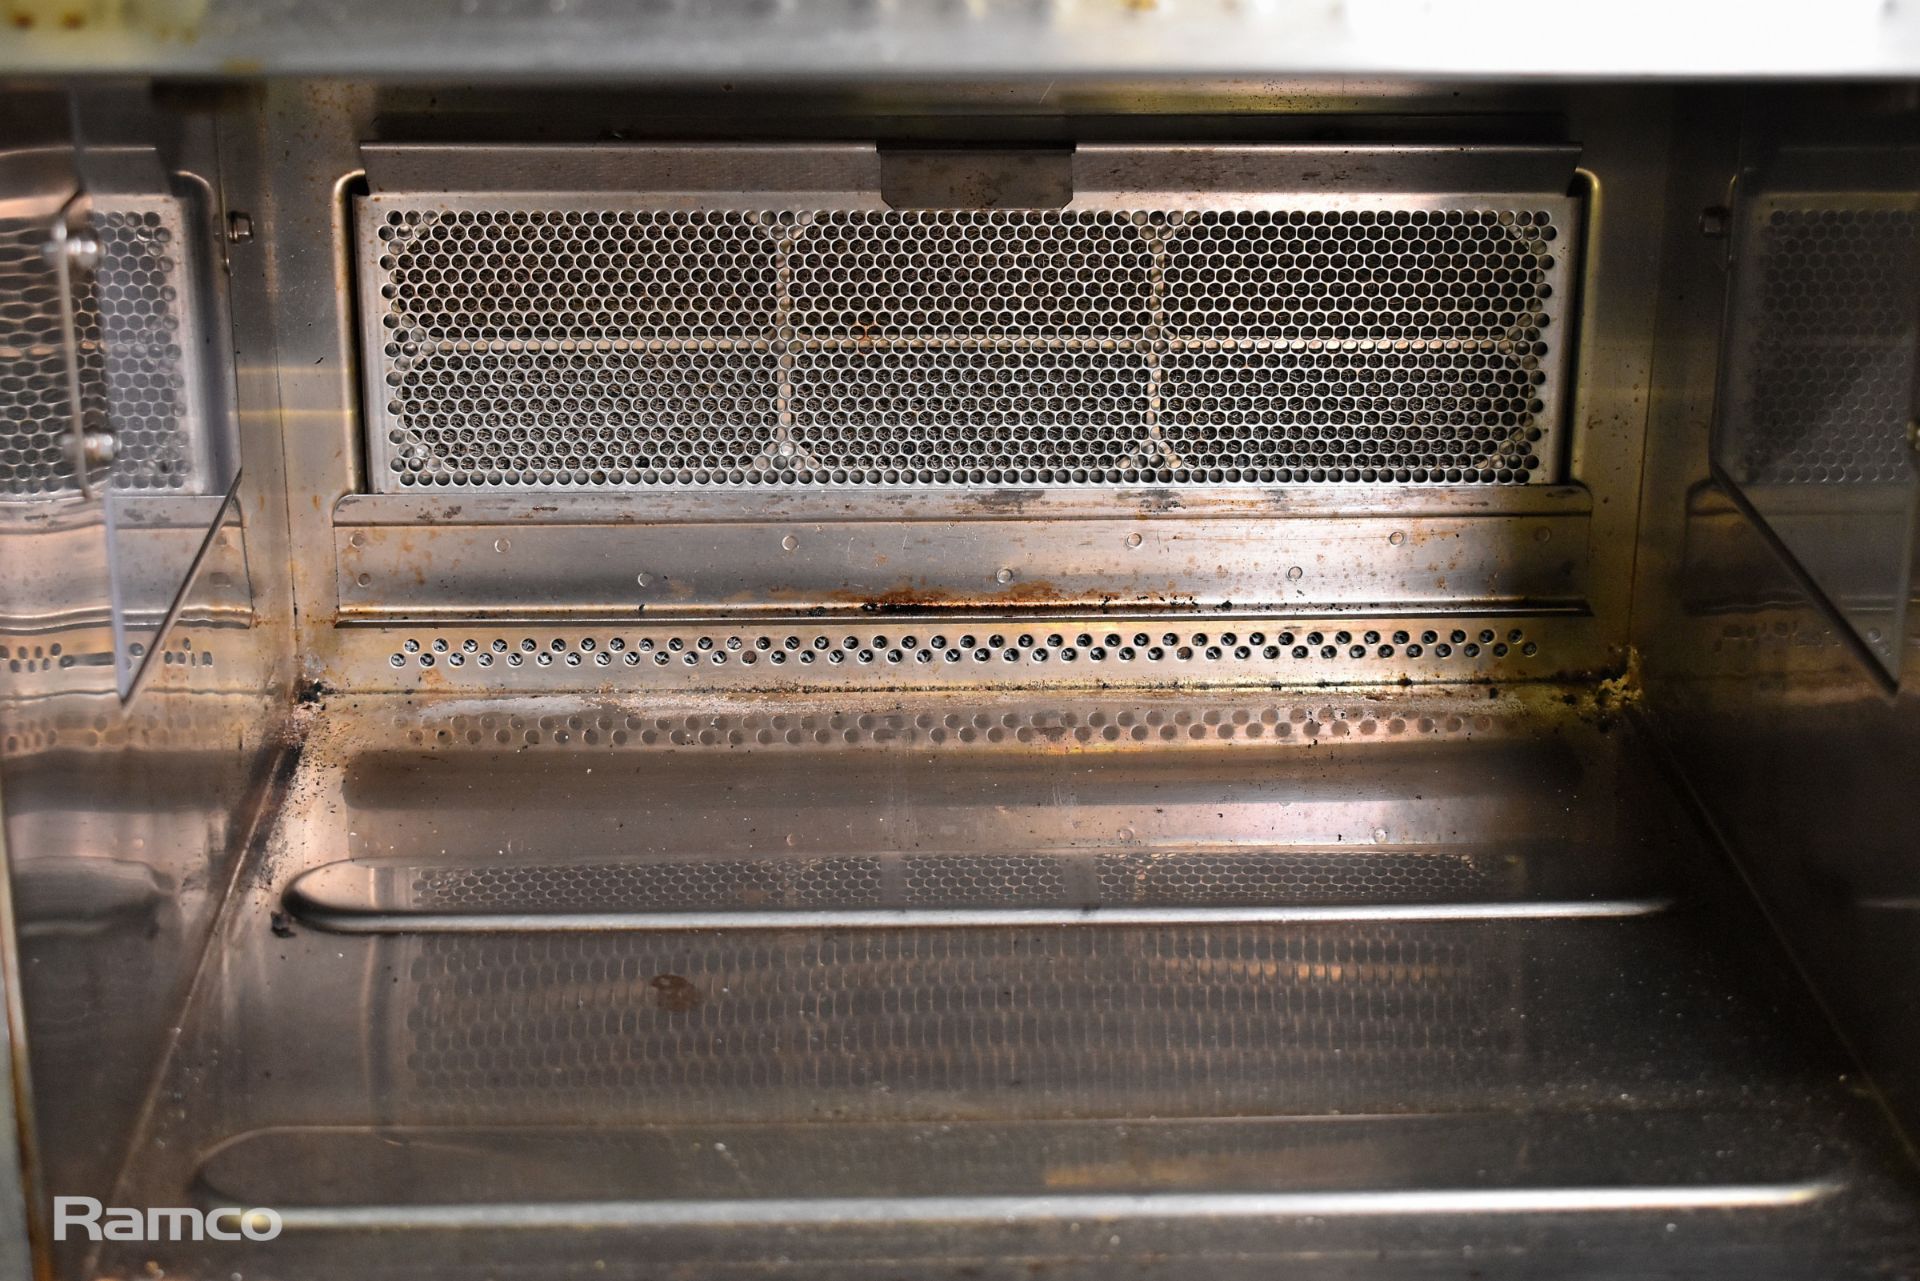 Merrychef Eikon e4 Combination oven, 220/240V 50Hz - L58 x W80 x H60cm - Image 3 of 5